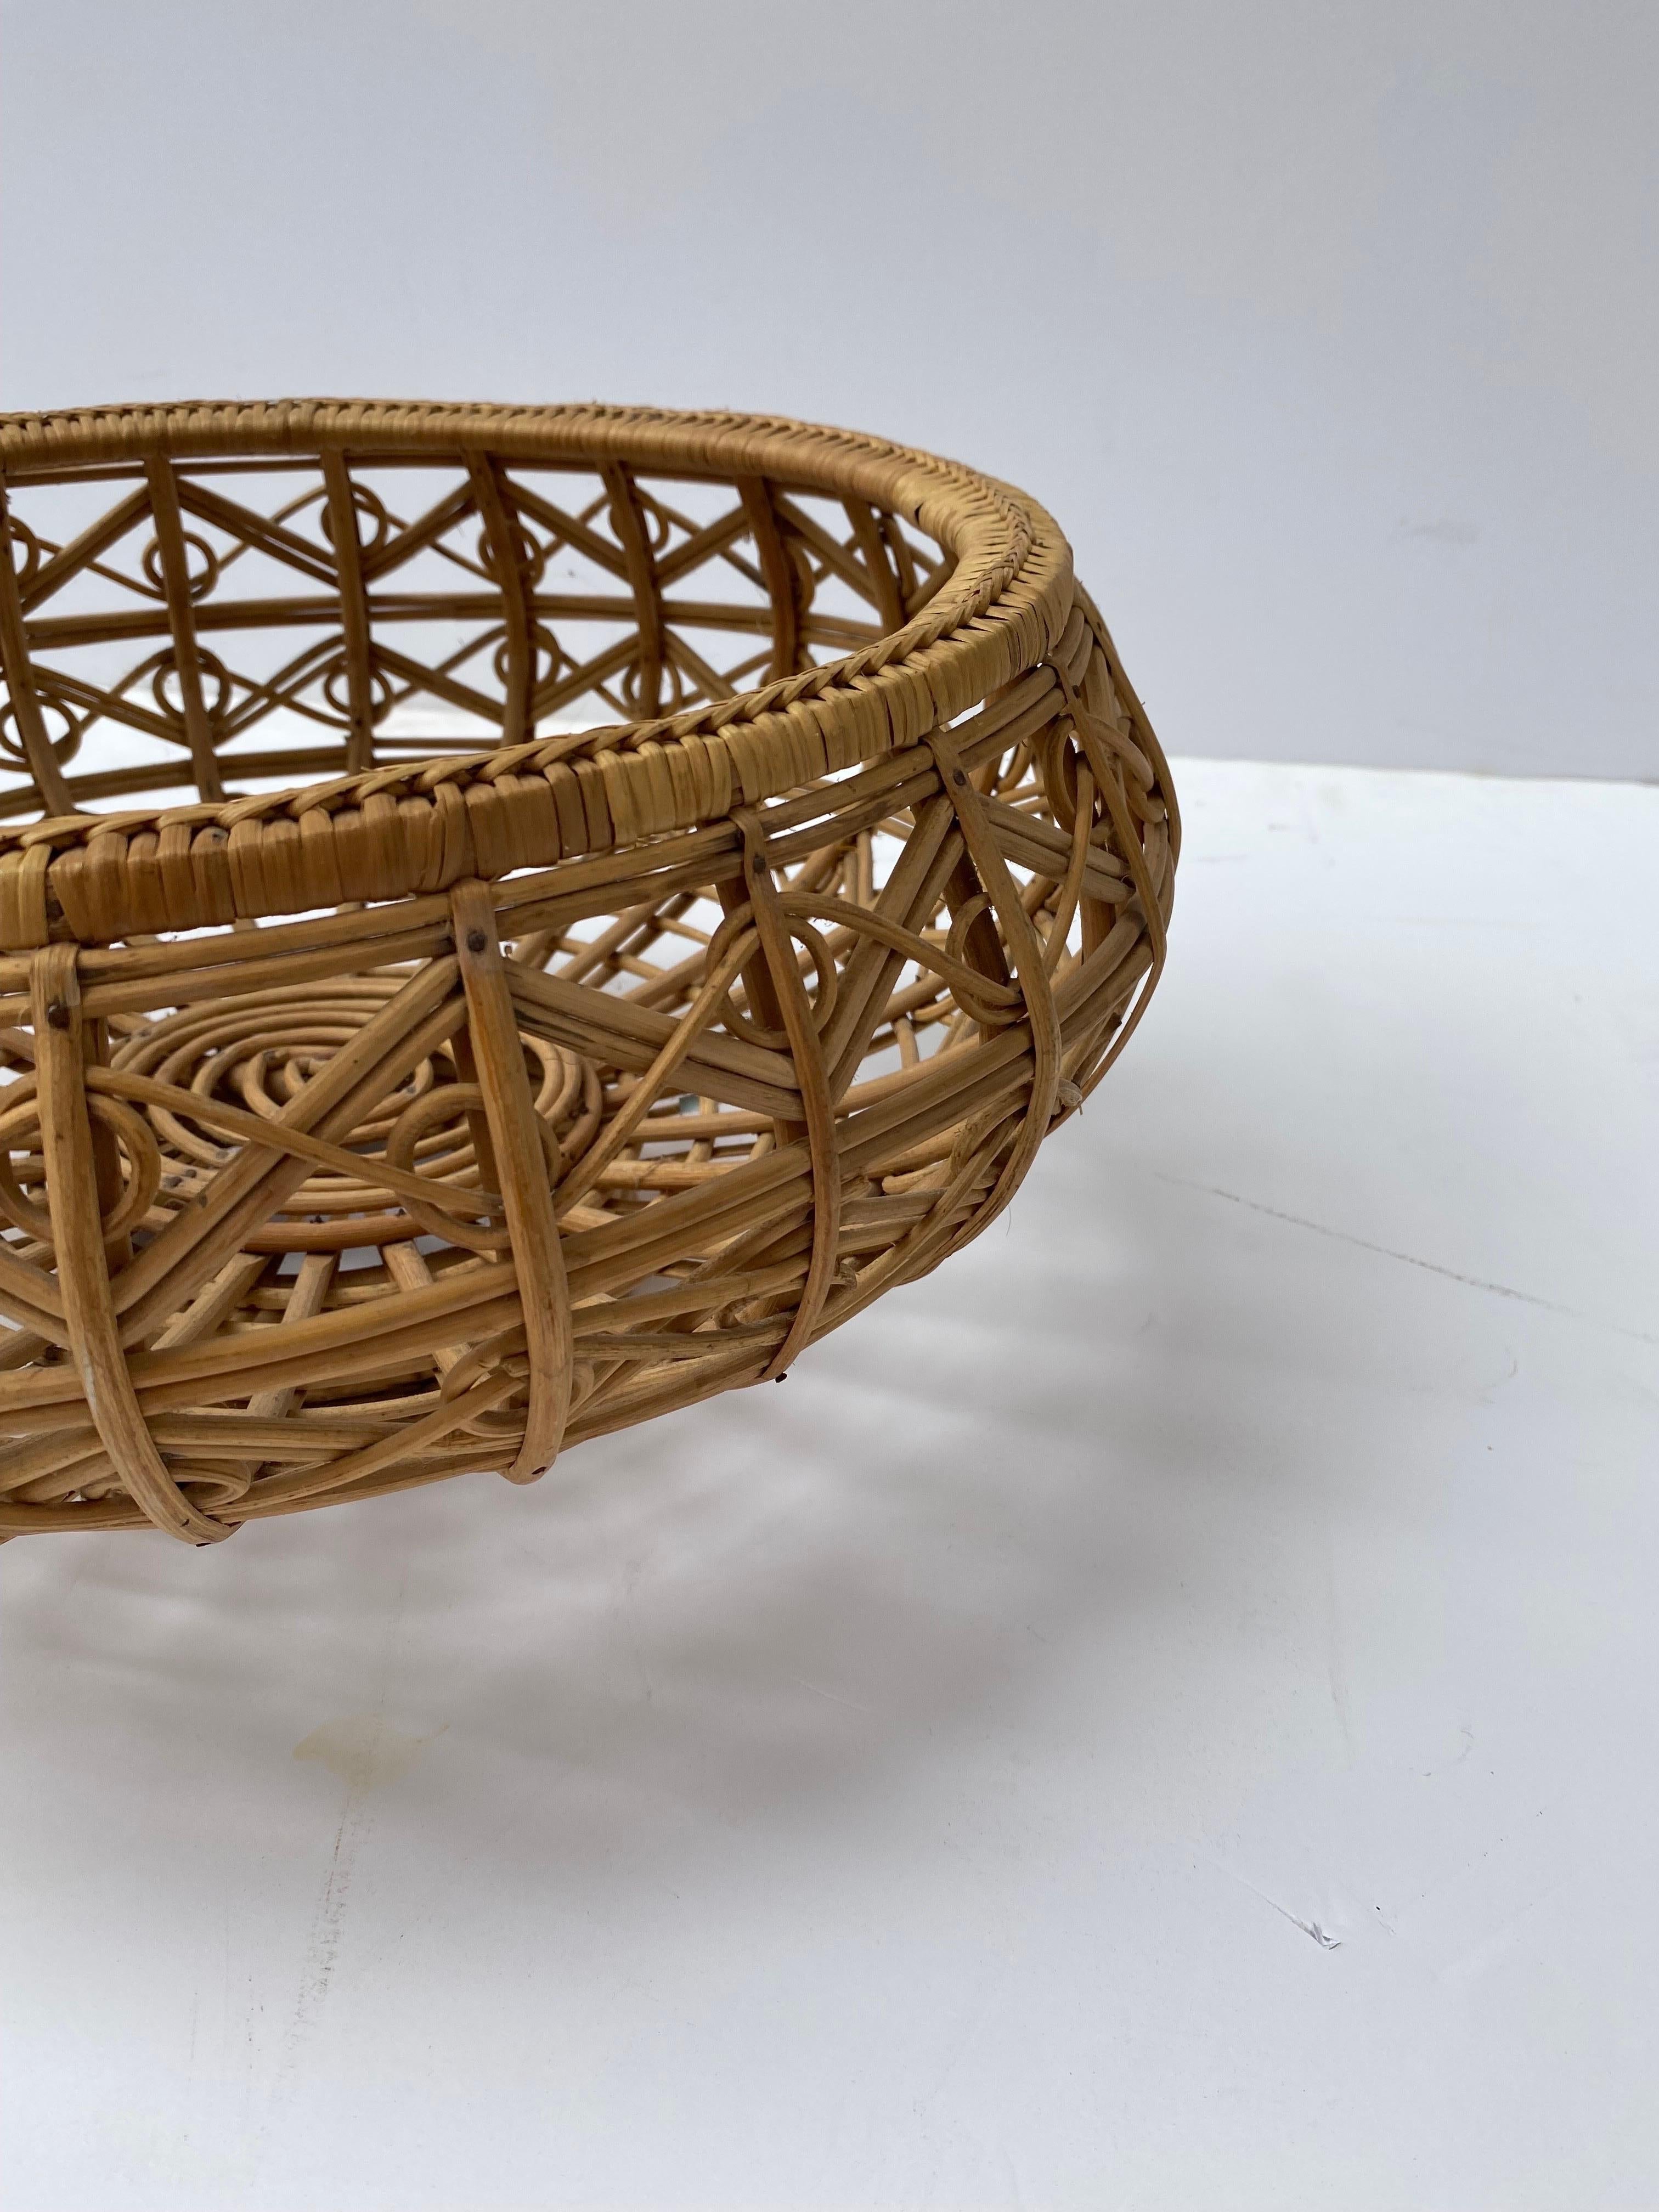 Franco Albini Style Wicker Basket.  Measures 16